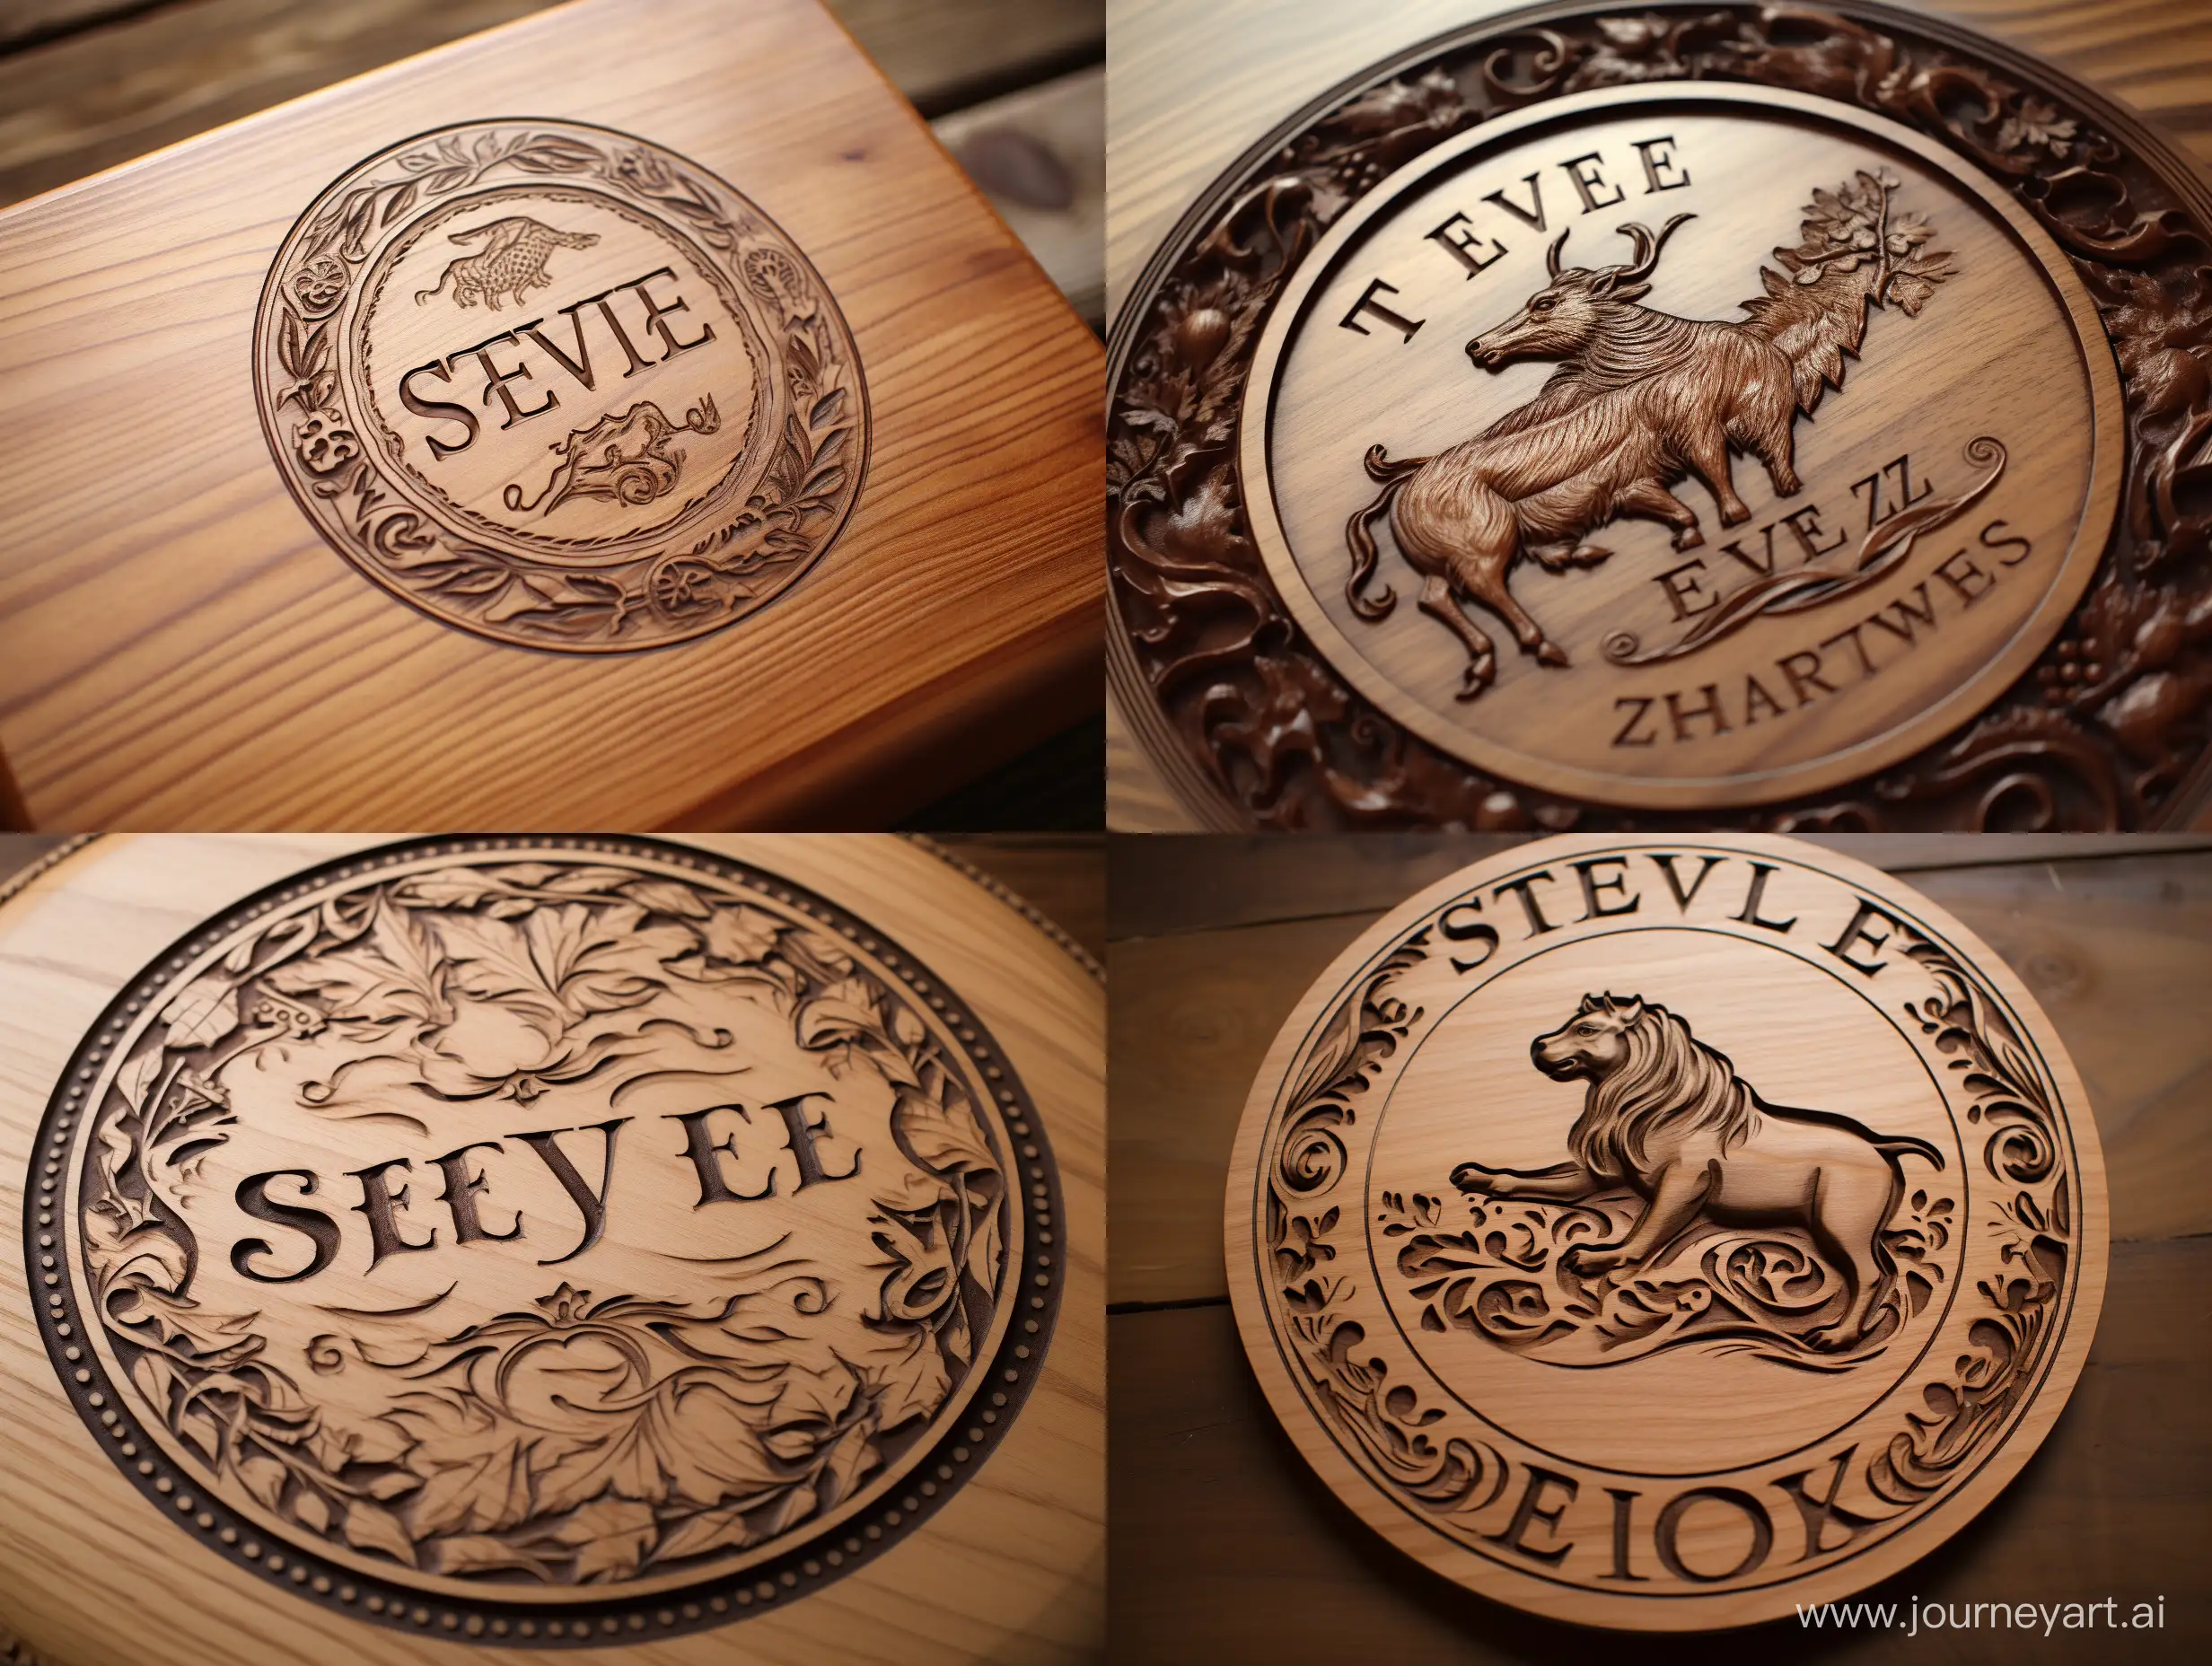 « STEEVE & FOLK » wooden engraved logo, European style